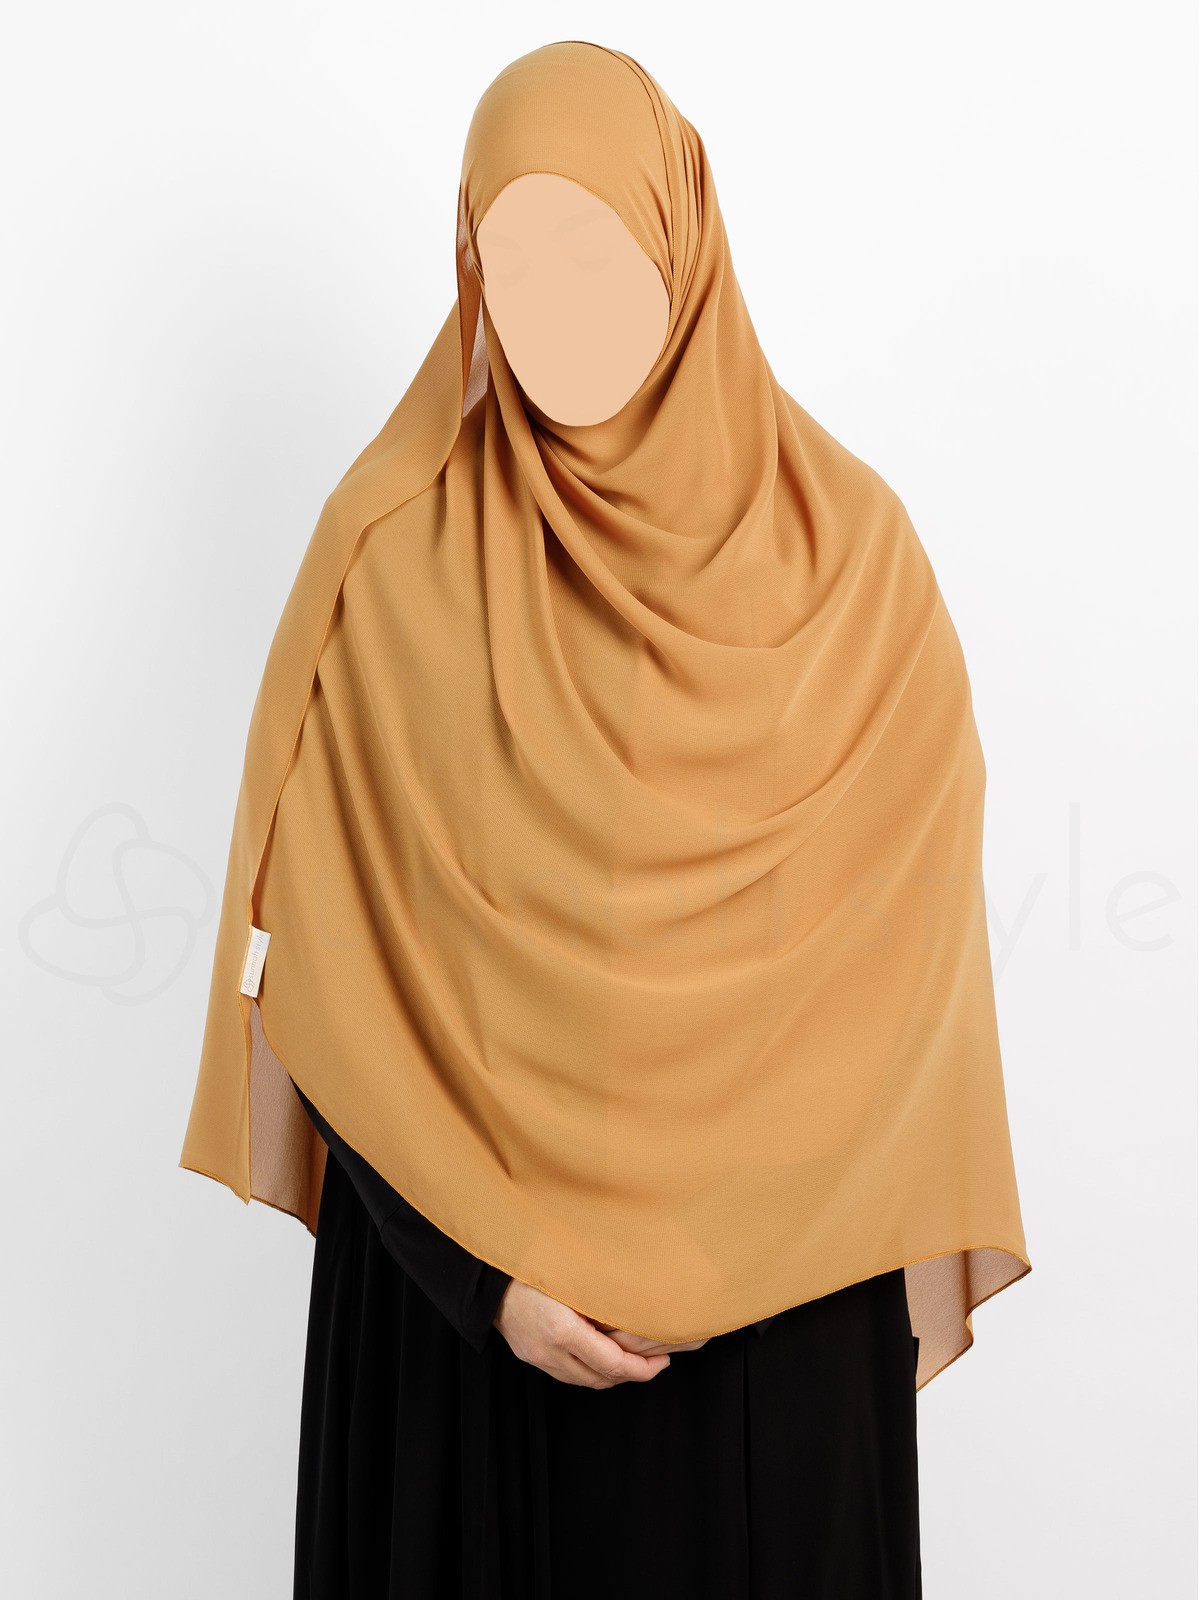 Sunnah Style - Essentials Shayla (Premium Chiffon) - XL (Honey)